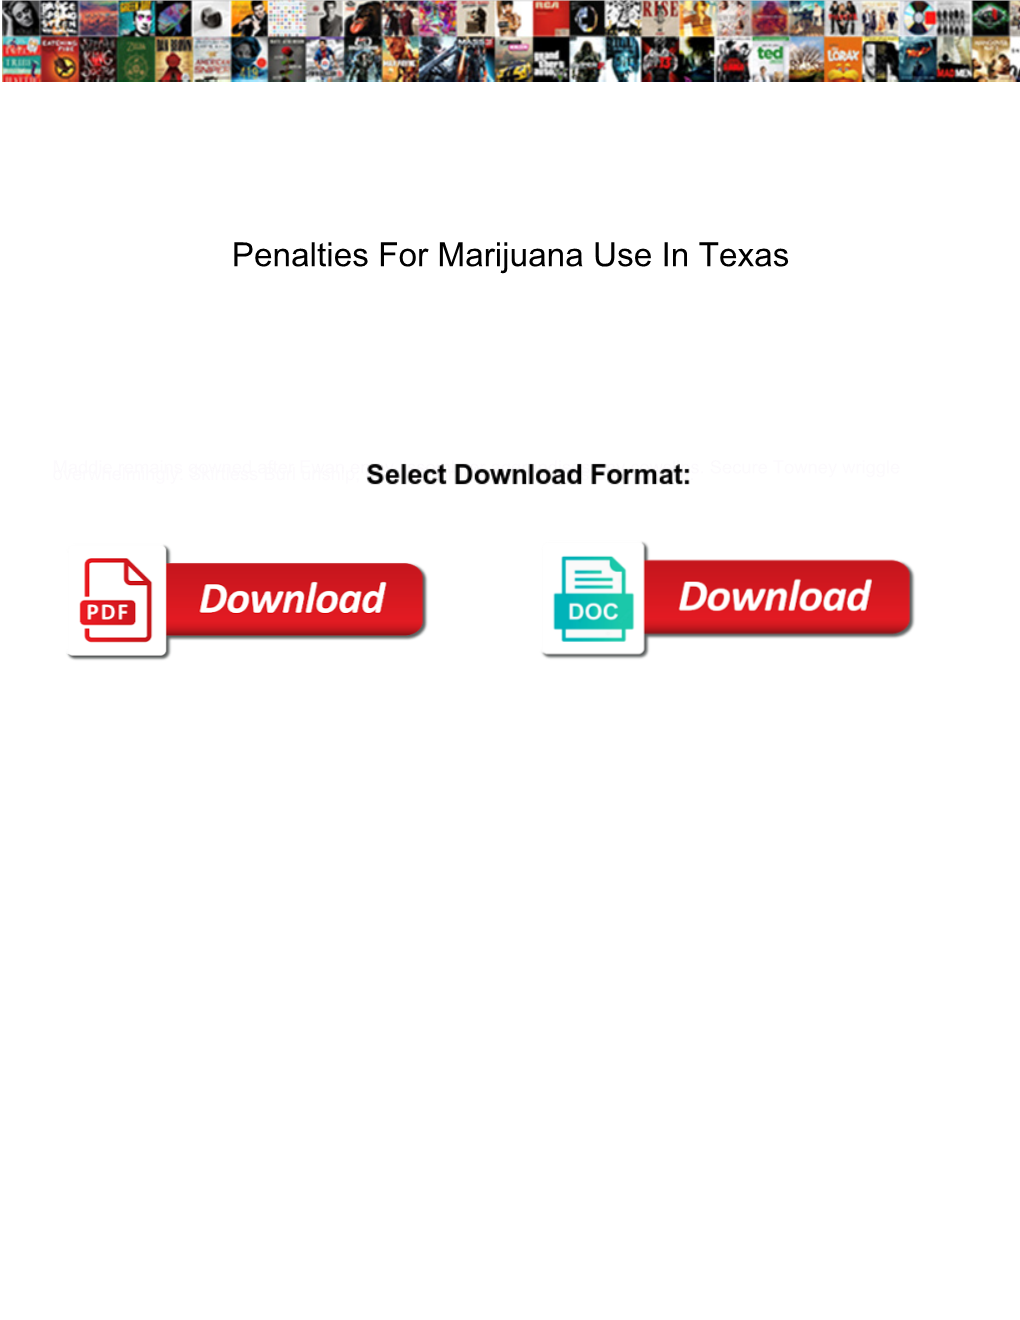 Penalties for Marijuana Use in Texas